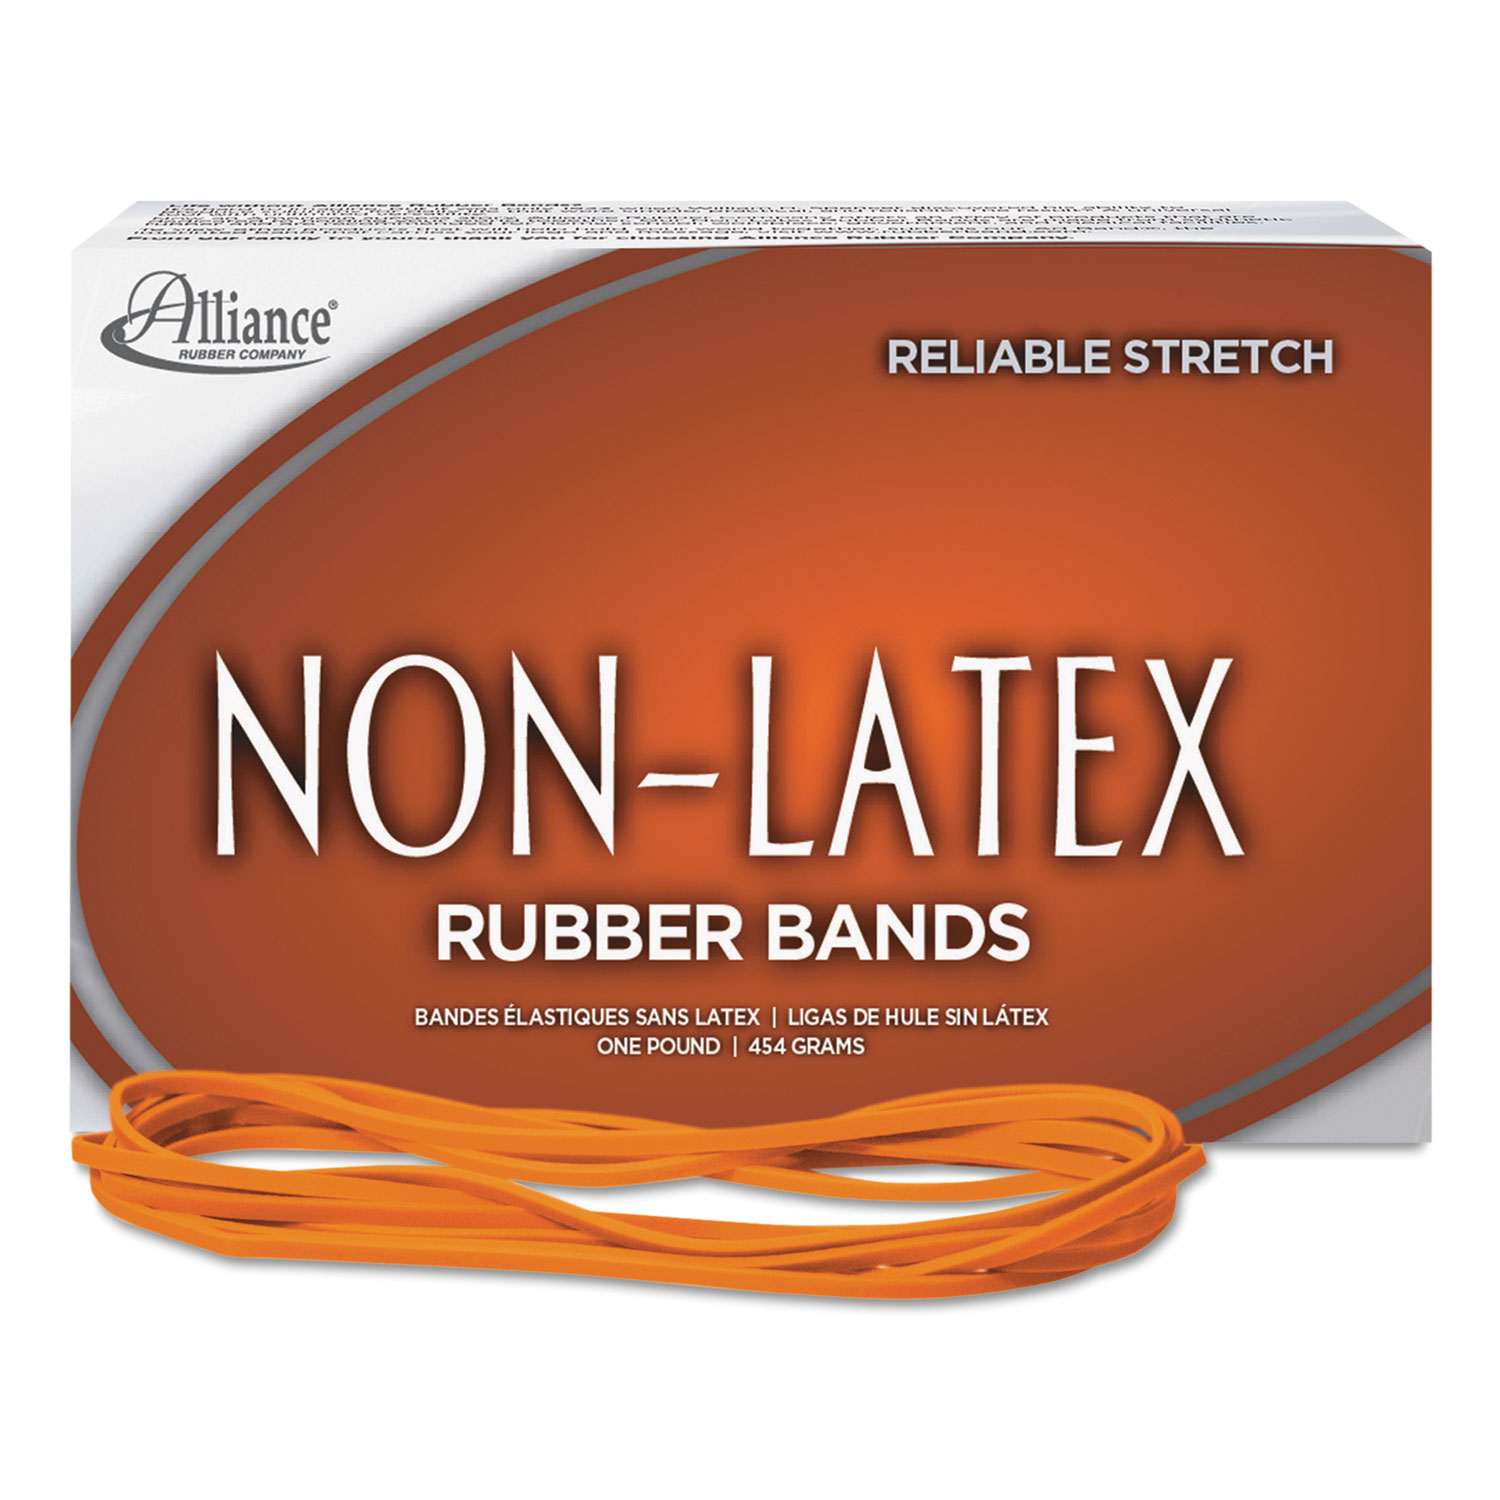 Non-Latex Rubber Bands, Sz. 117B, Orange, 7 x 1/8, 250 Bands/1lb Box